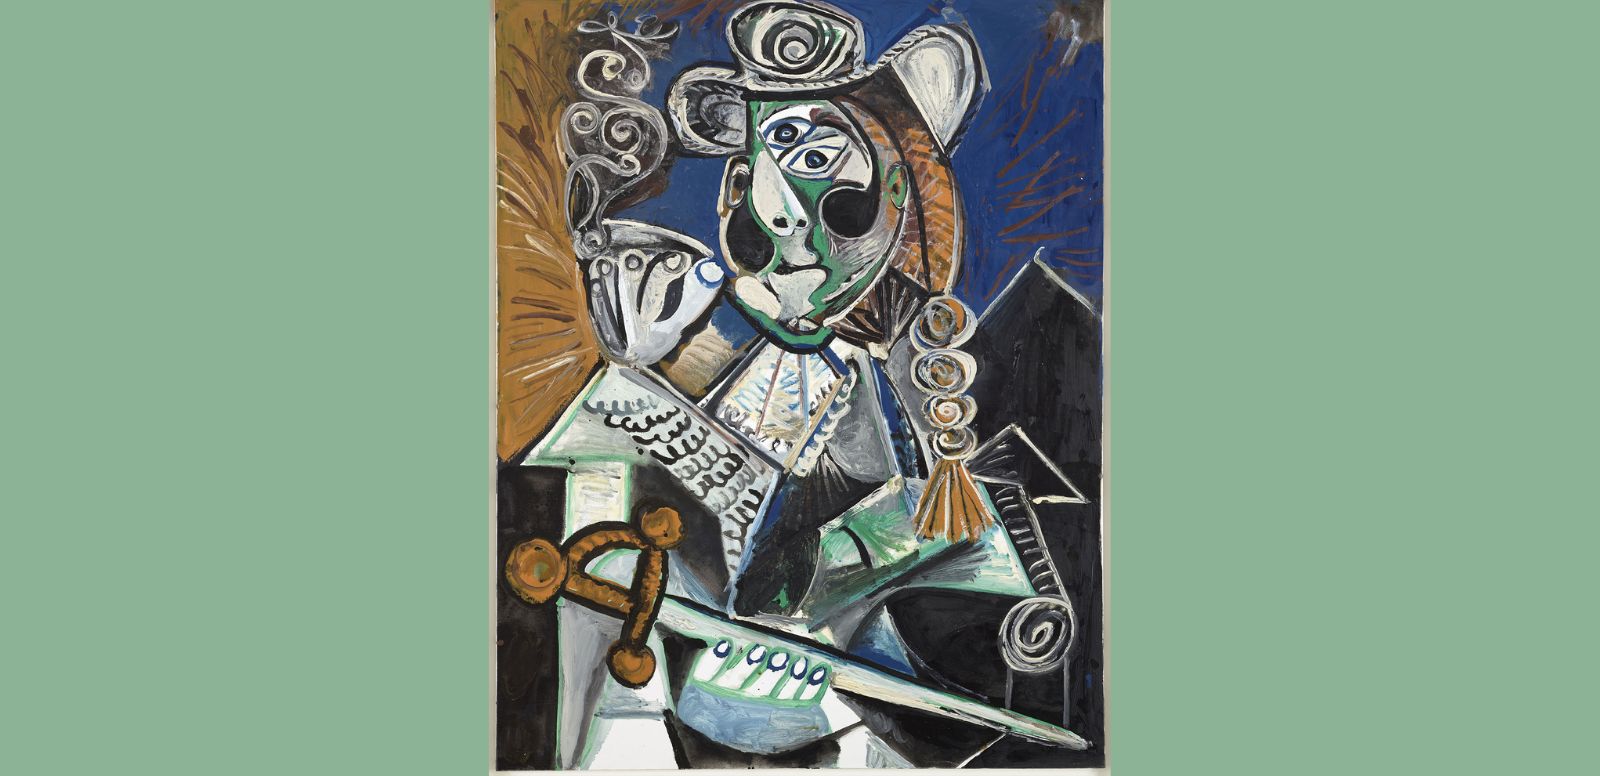 Pablo Picasso, "Le Matador, Mougins", 1970